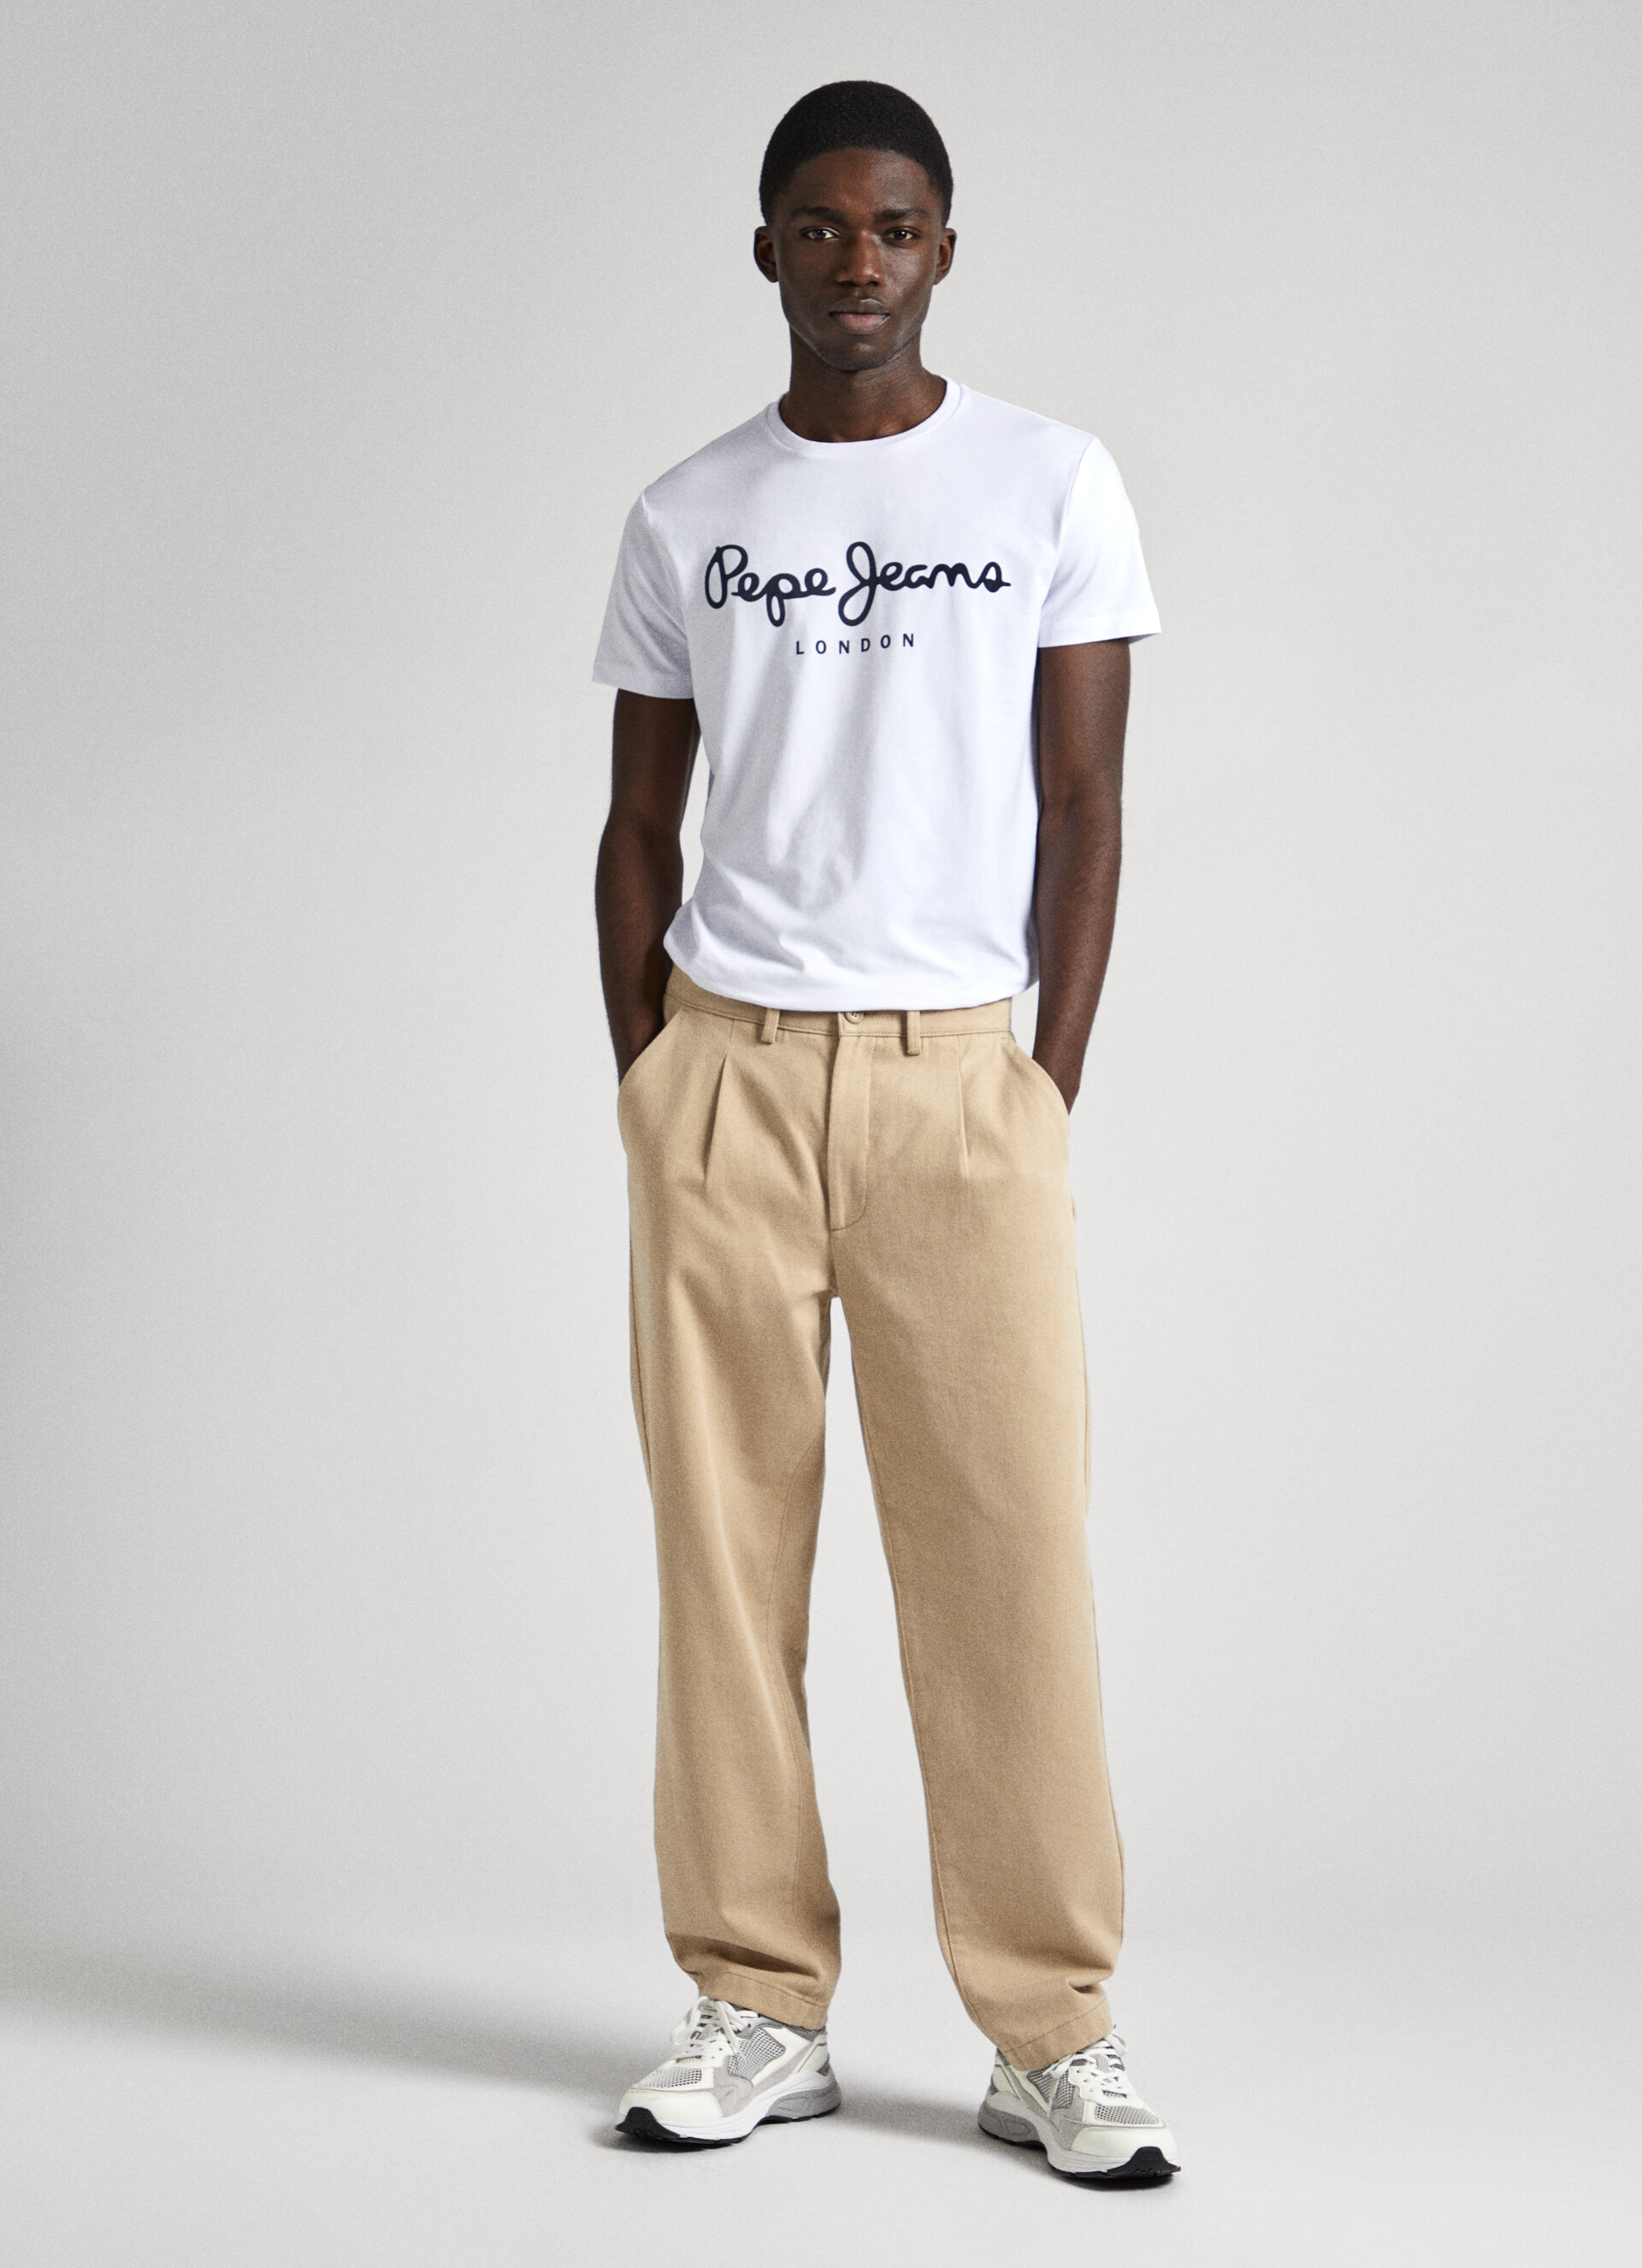 Shop Women's Pepe Jeans Denim Jackets up to 80% Off | DealDoodle